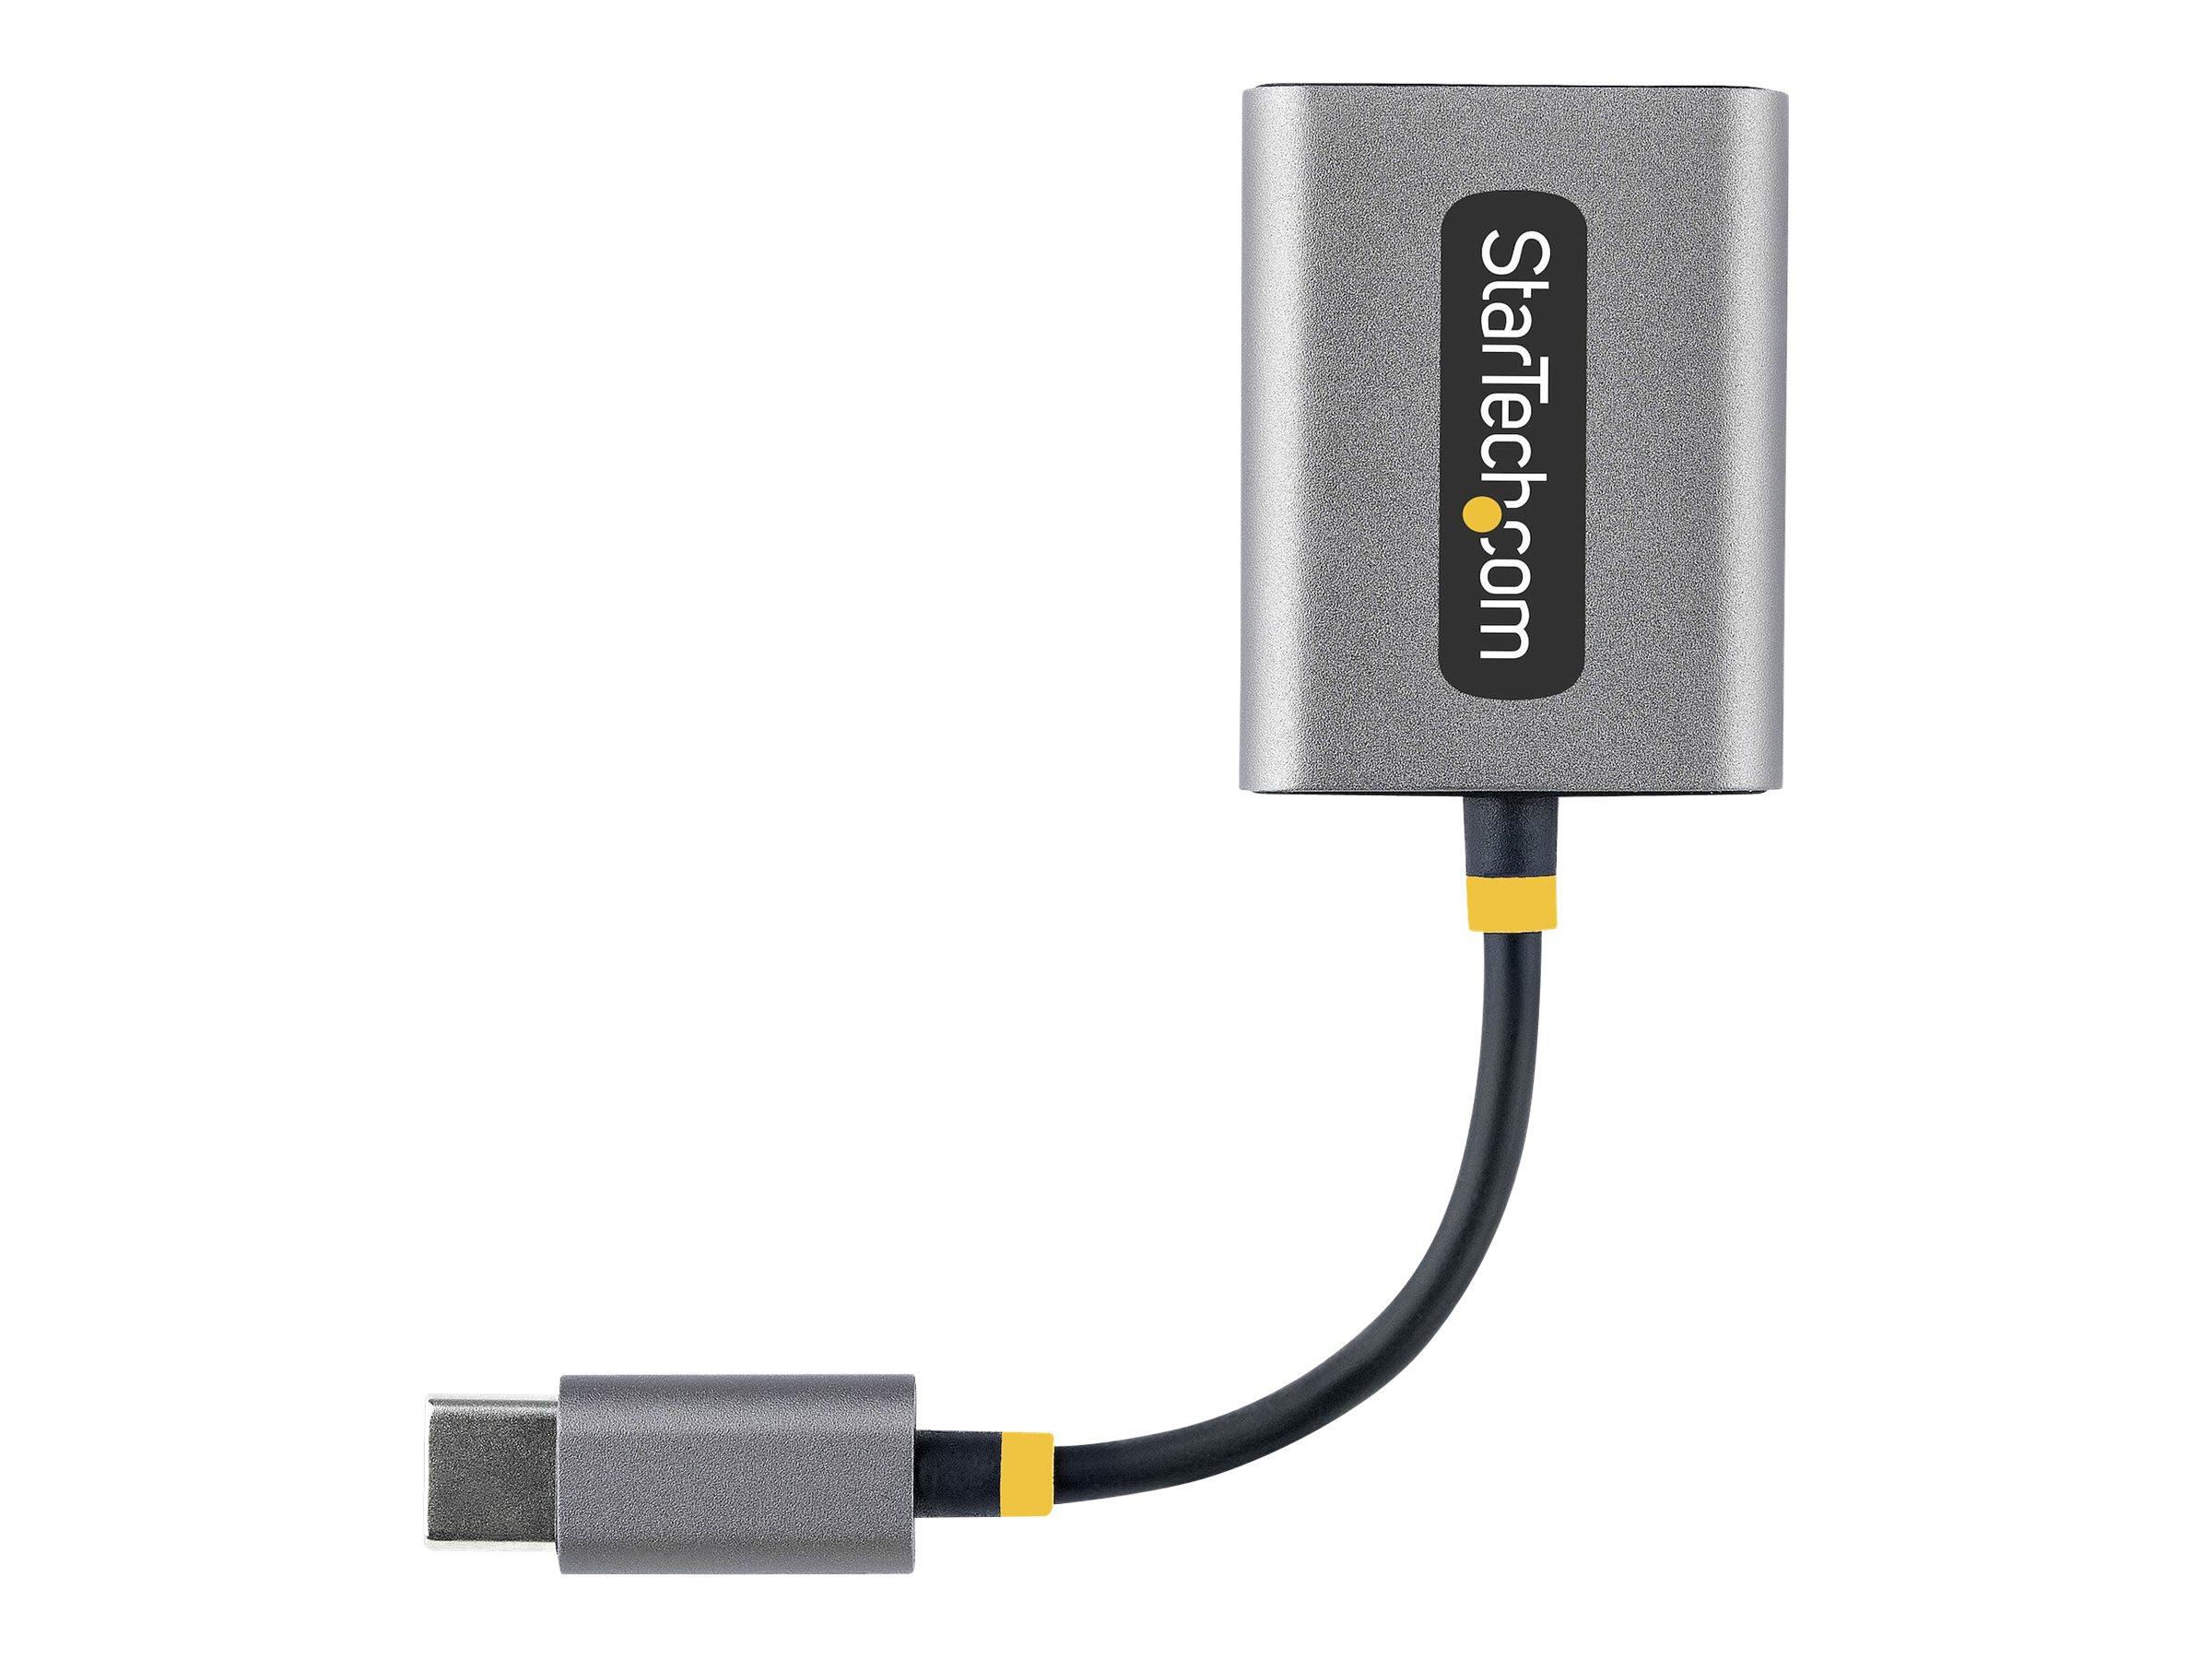 StarTech.com Slim Mini Jack 3.5mm Audio Splitter - 3.5 to 2x 3.5mm - Black